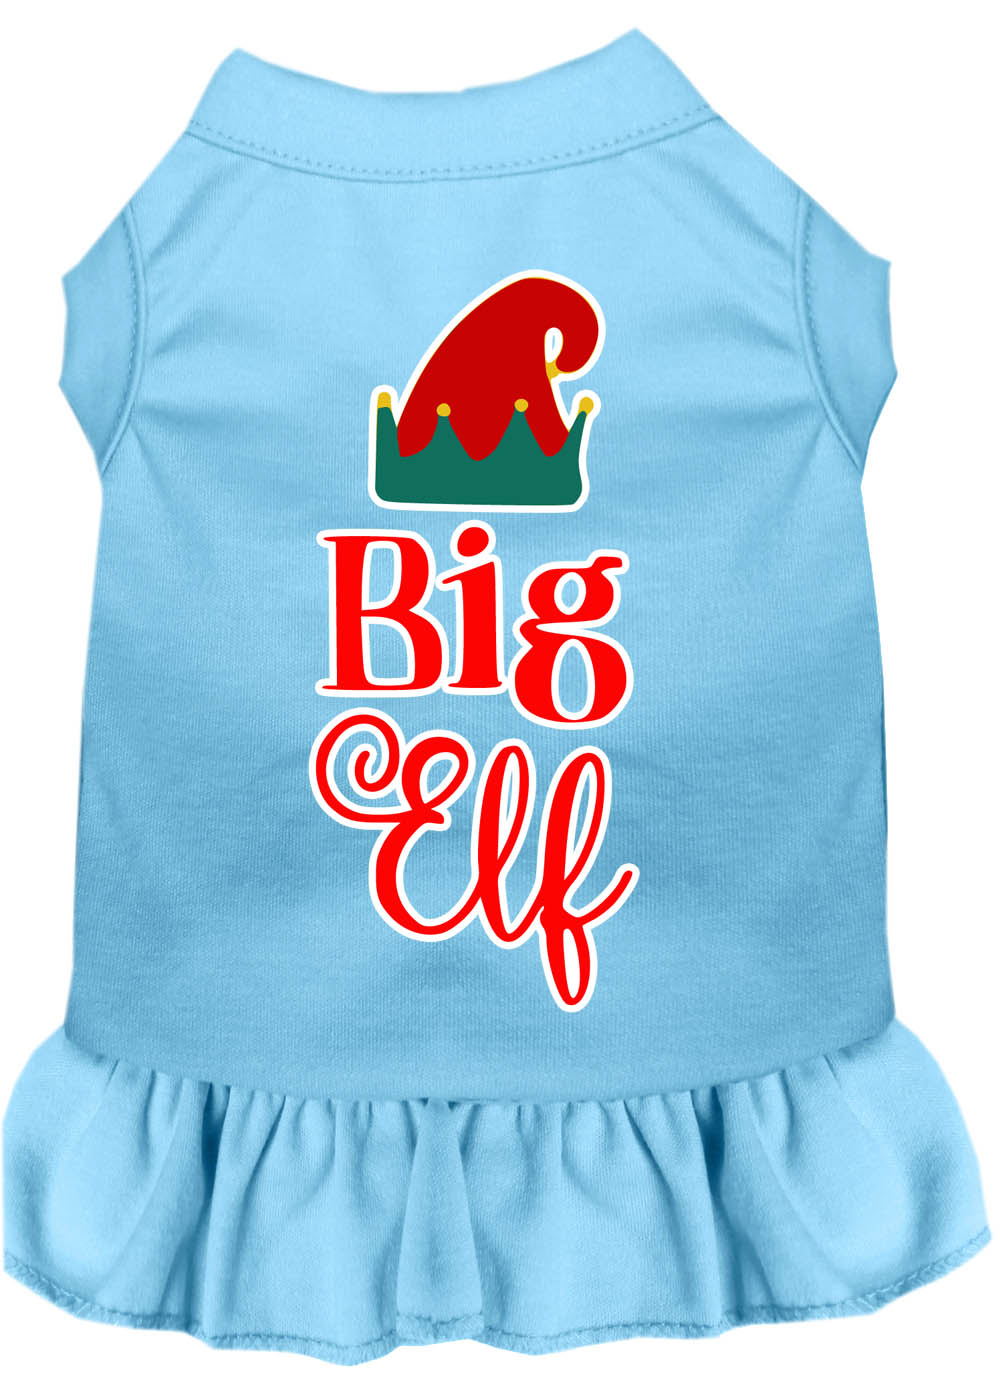 Big Elf Screen Print Dog Dress Baby Blue 4X